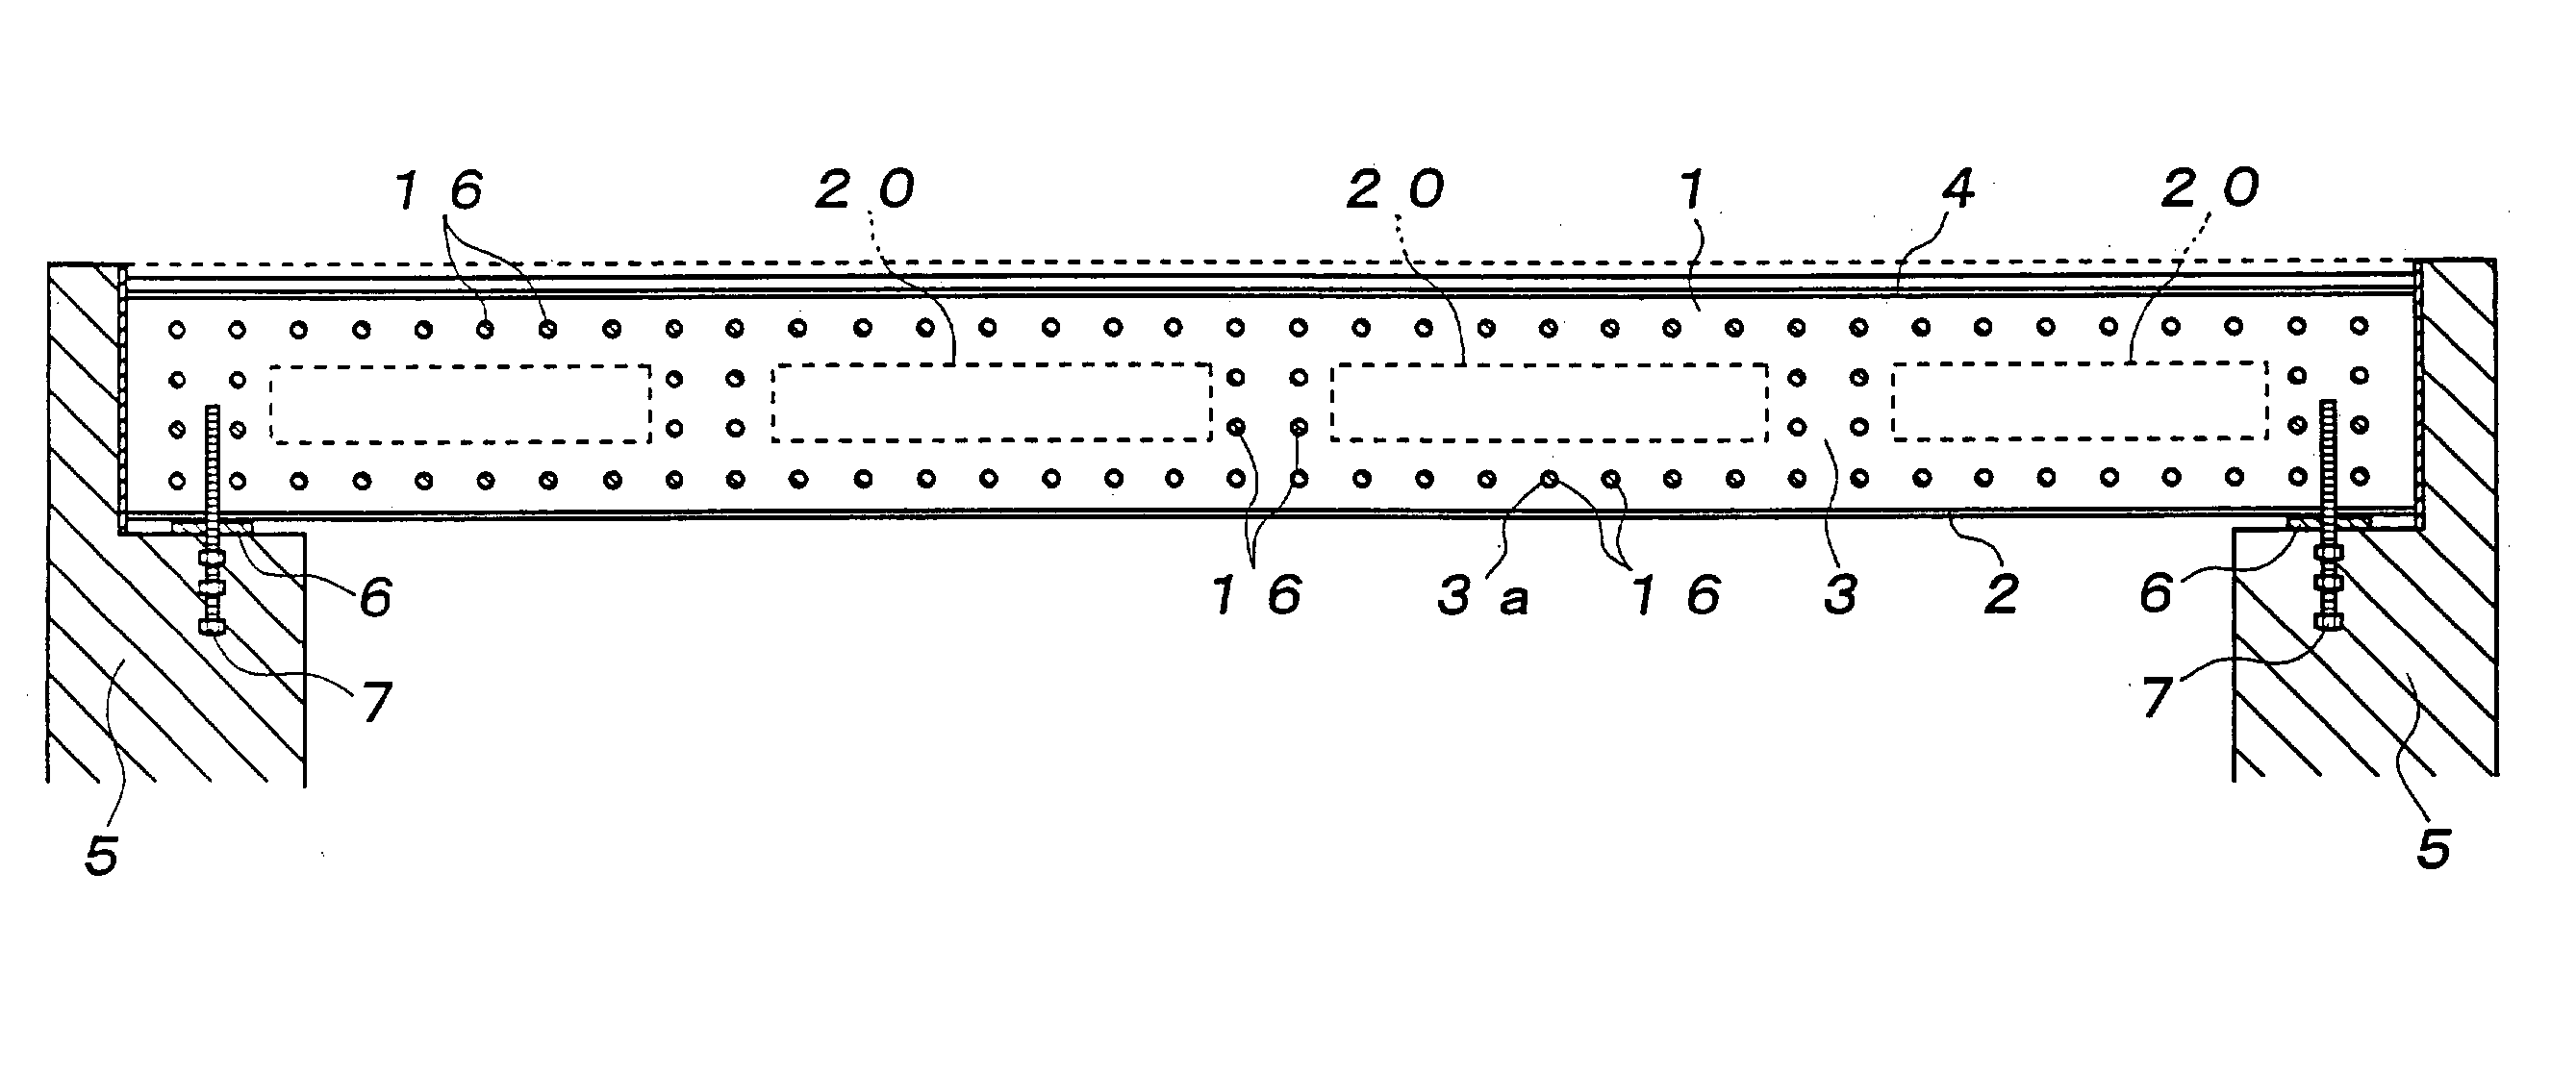 Structure of floor slab bridge